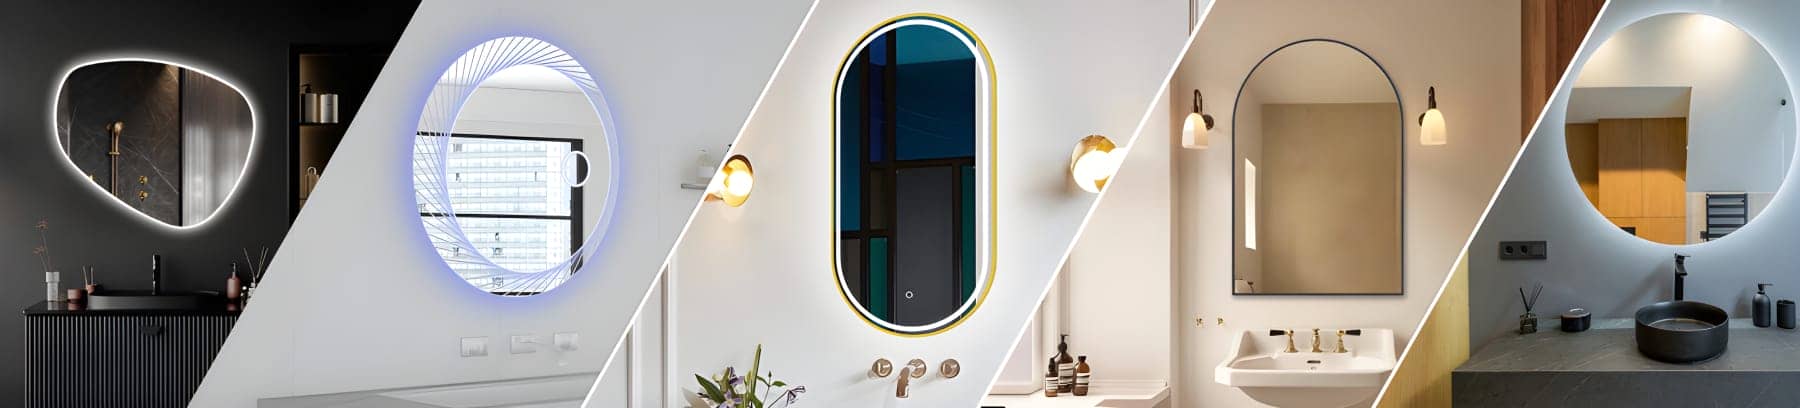 bathroom vanity led mirrors supplies the-northern-suburbs